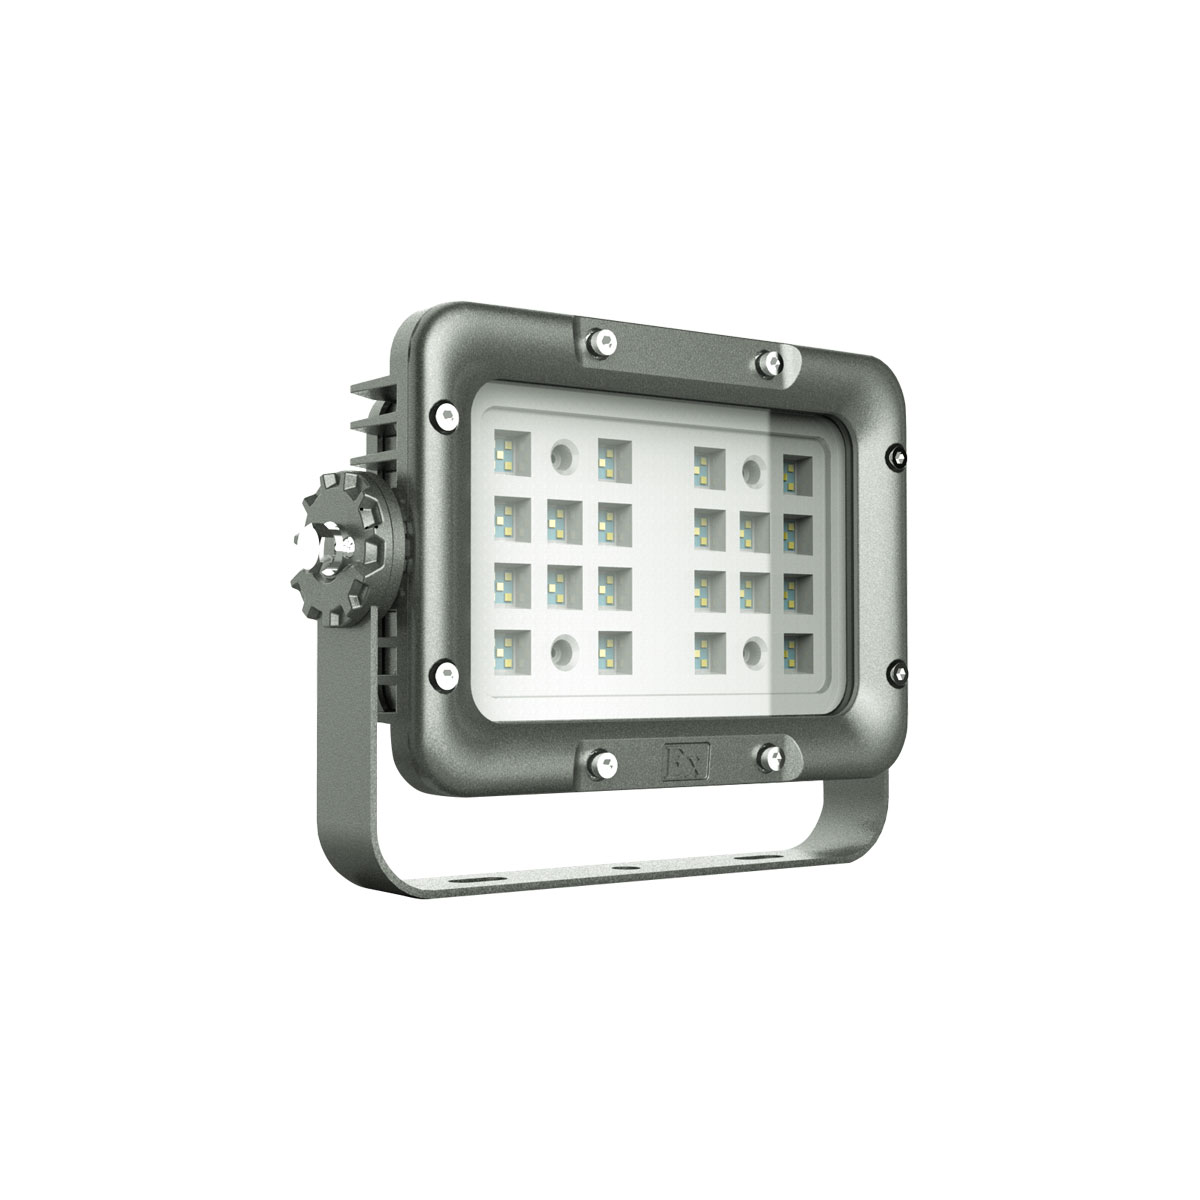 Proiector LED ANTIEX Secom ATEX40 30W cu kit de emergenta 1h zona 1/21 lumina rece IP66